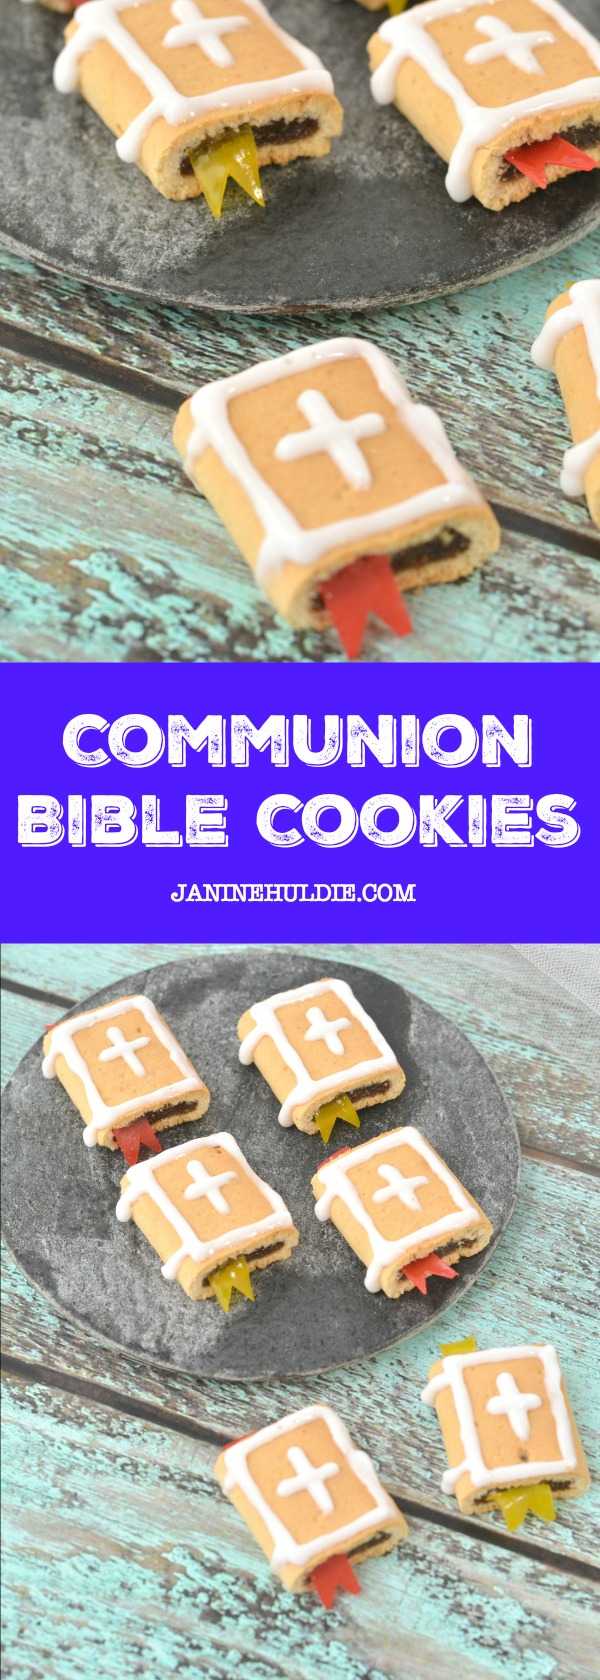 Communion Bible Cookies Recipe